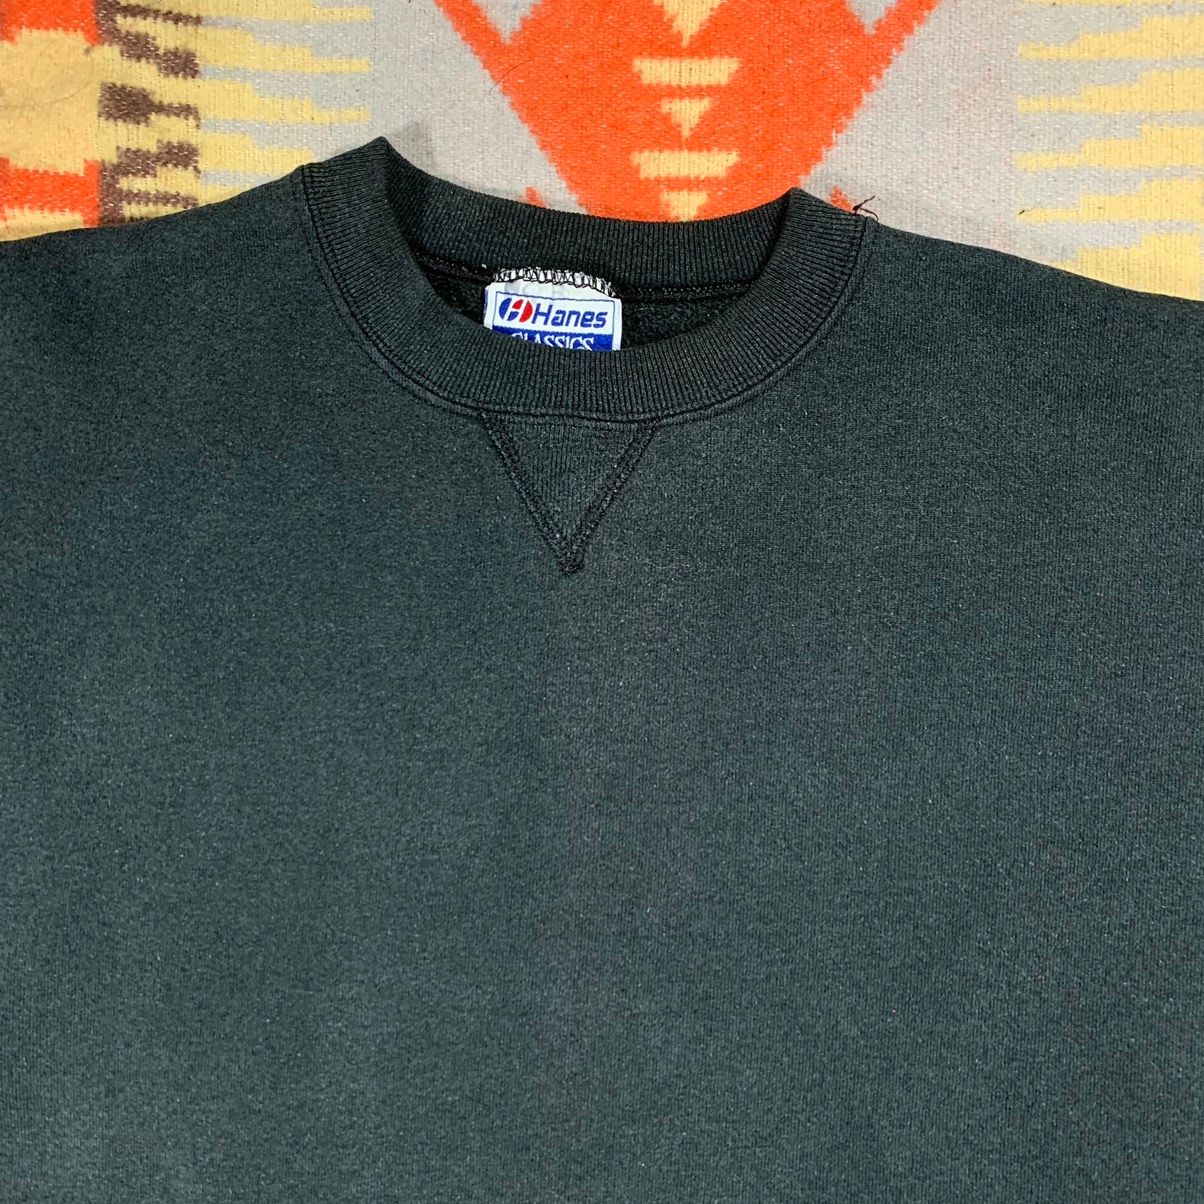 Vintage Vintage 1990’s Hanes Blank Sweatshirt Sun Faded Black Size US XL / EU 56 / 4 - 2 Preview